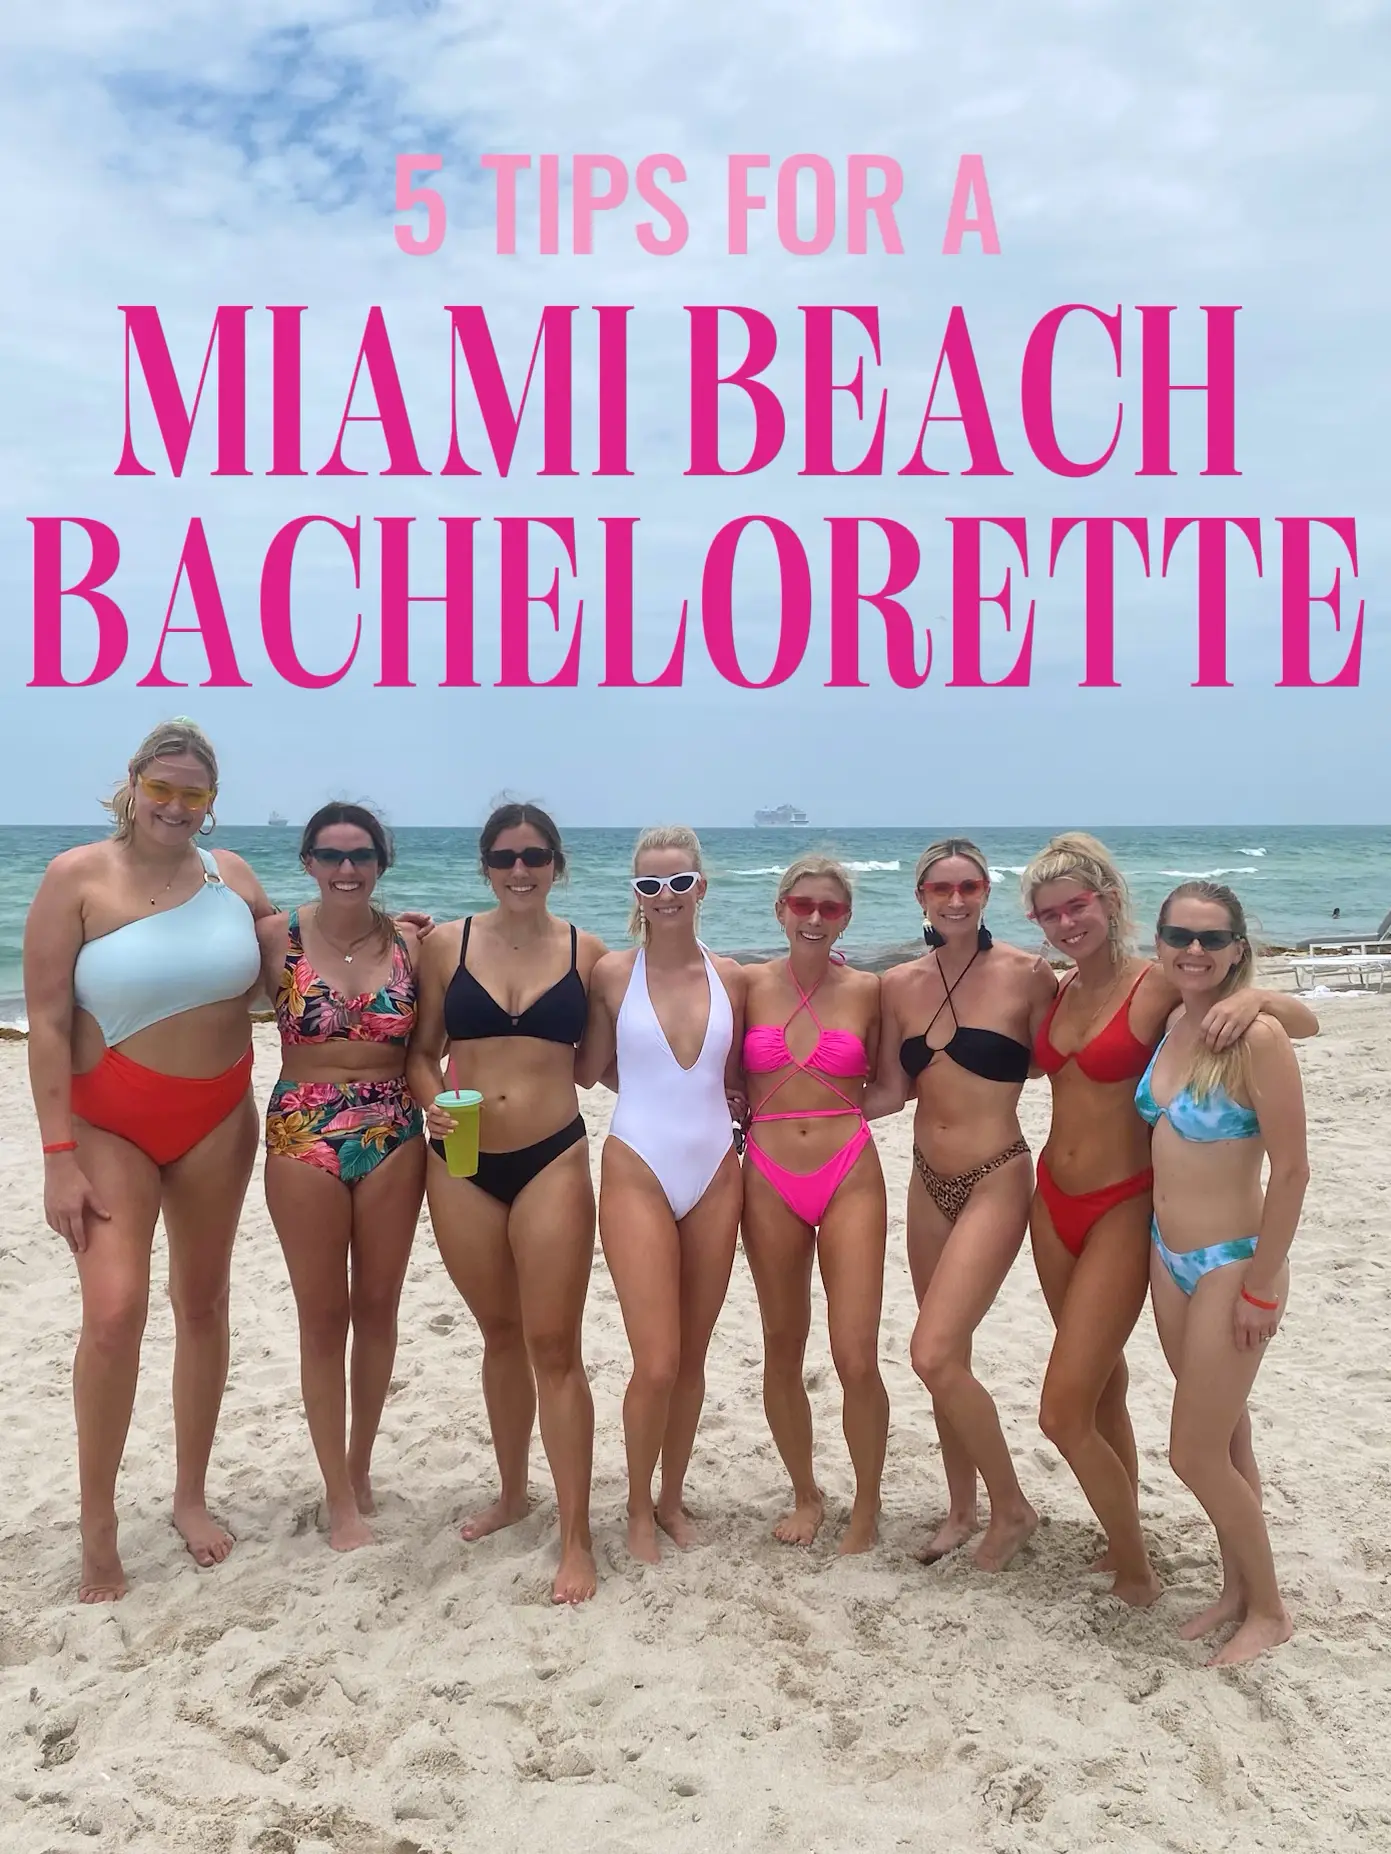 Bachelorette bathing suit ideas  Bridal bachelorette party, Bachelorette  party planning, Dream beach wedding